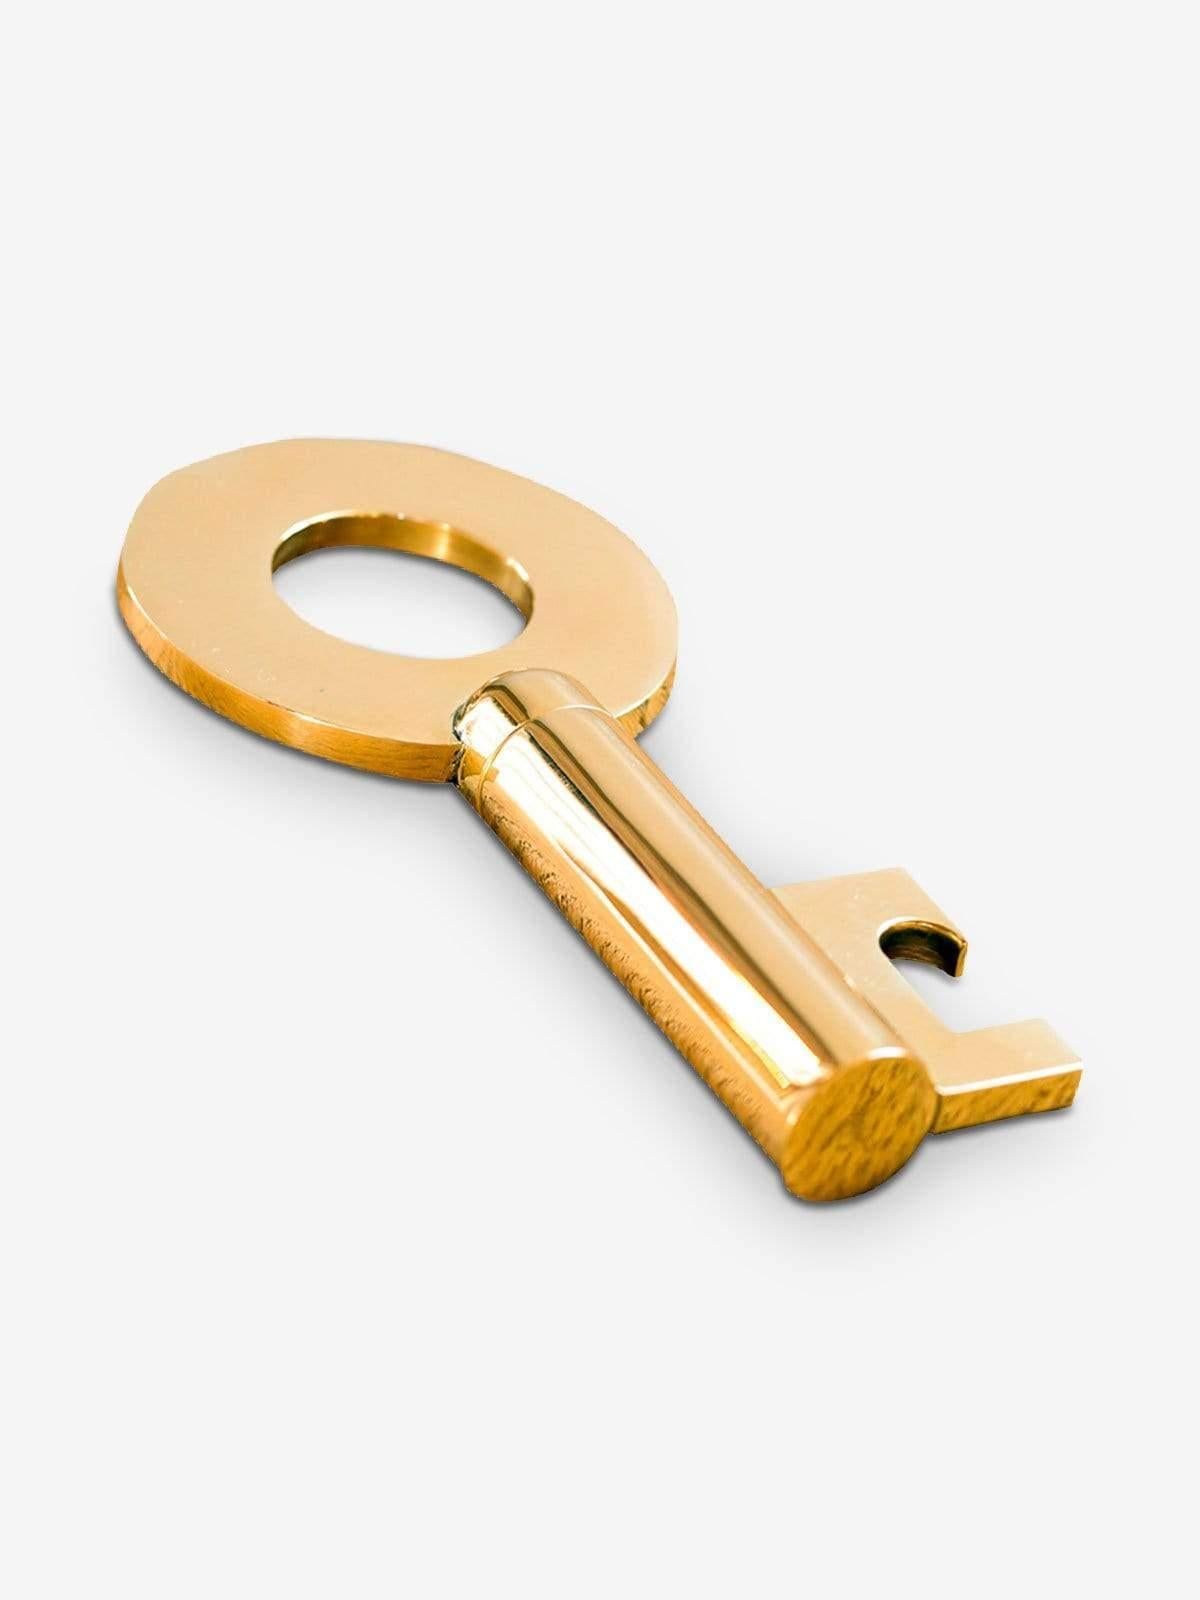 Contemporary Brass Key Corkscrew by Carl Aubock For Sale